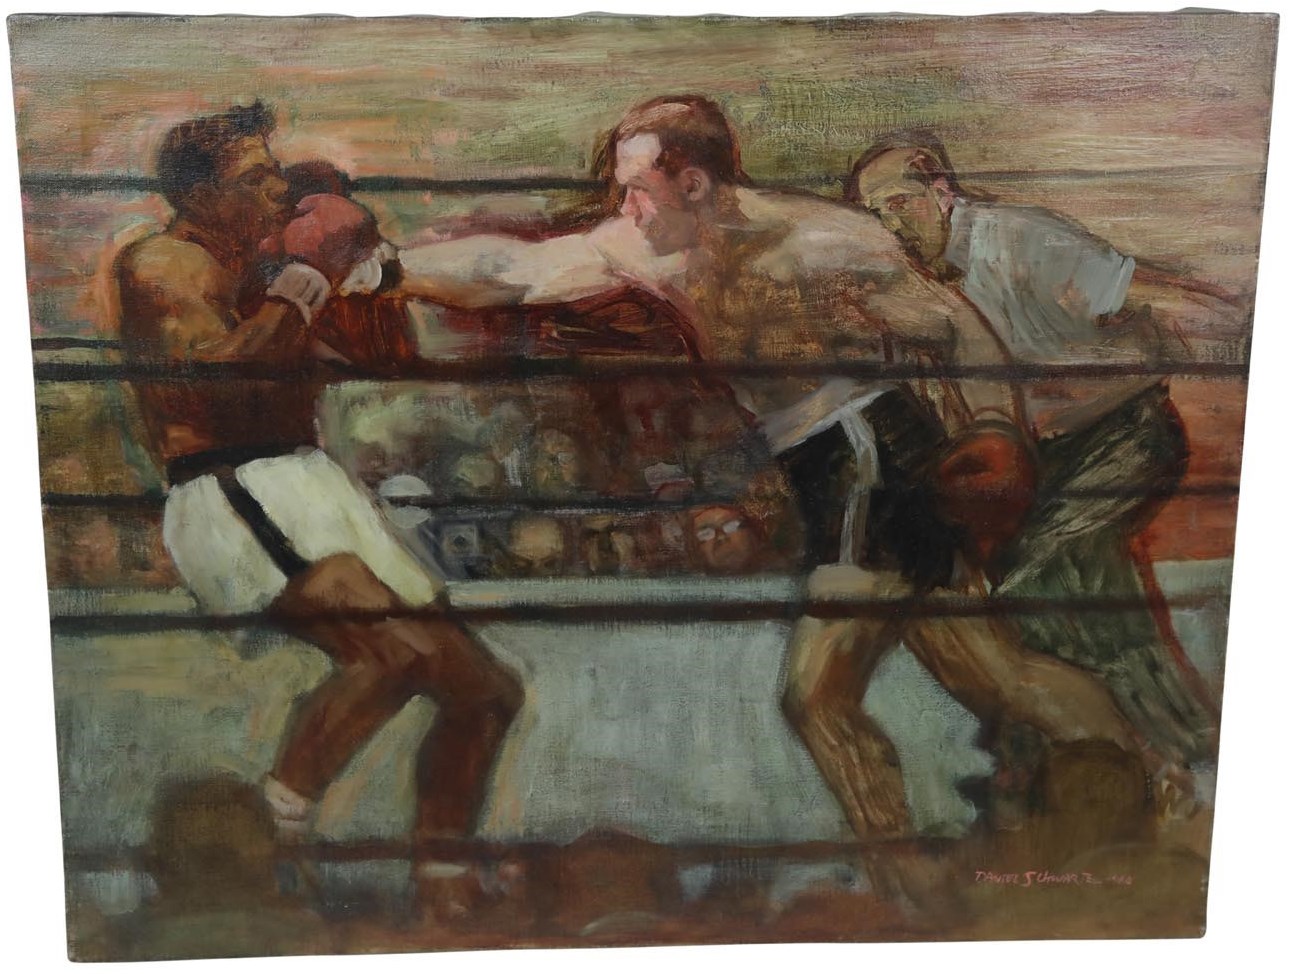 1959 "Ingemar Johansson Knocks out Floyd Patterson" Oil on Canvas by Daniel Schwartz - Featured in 1960 Esquire Magazine